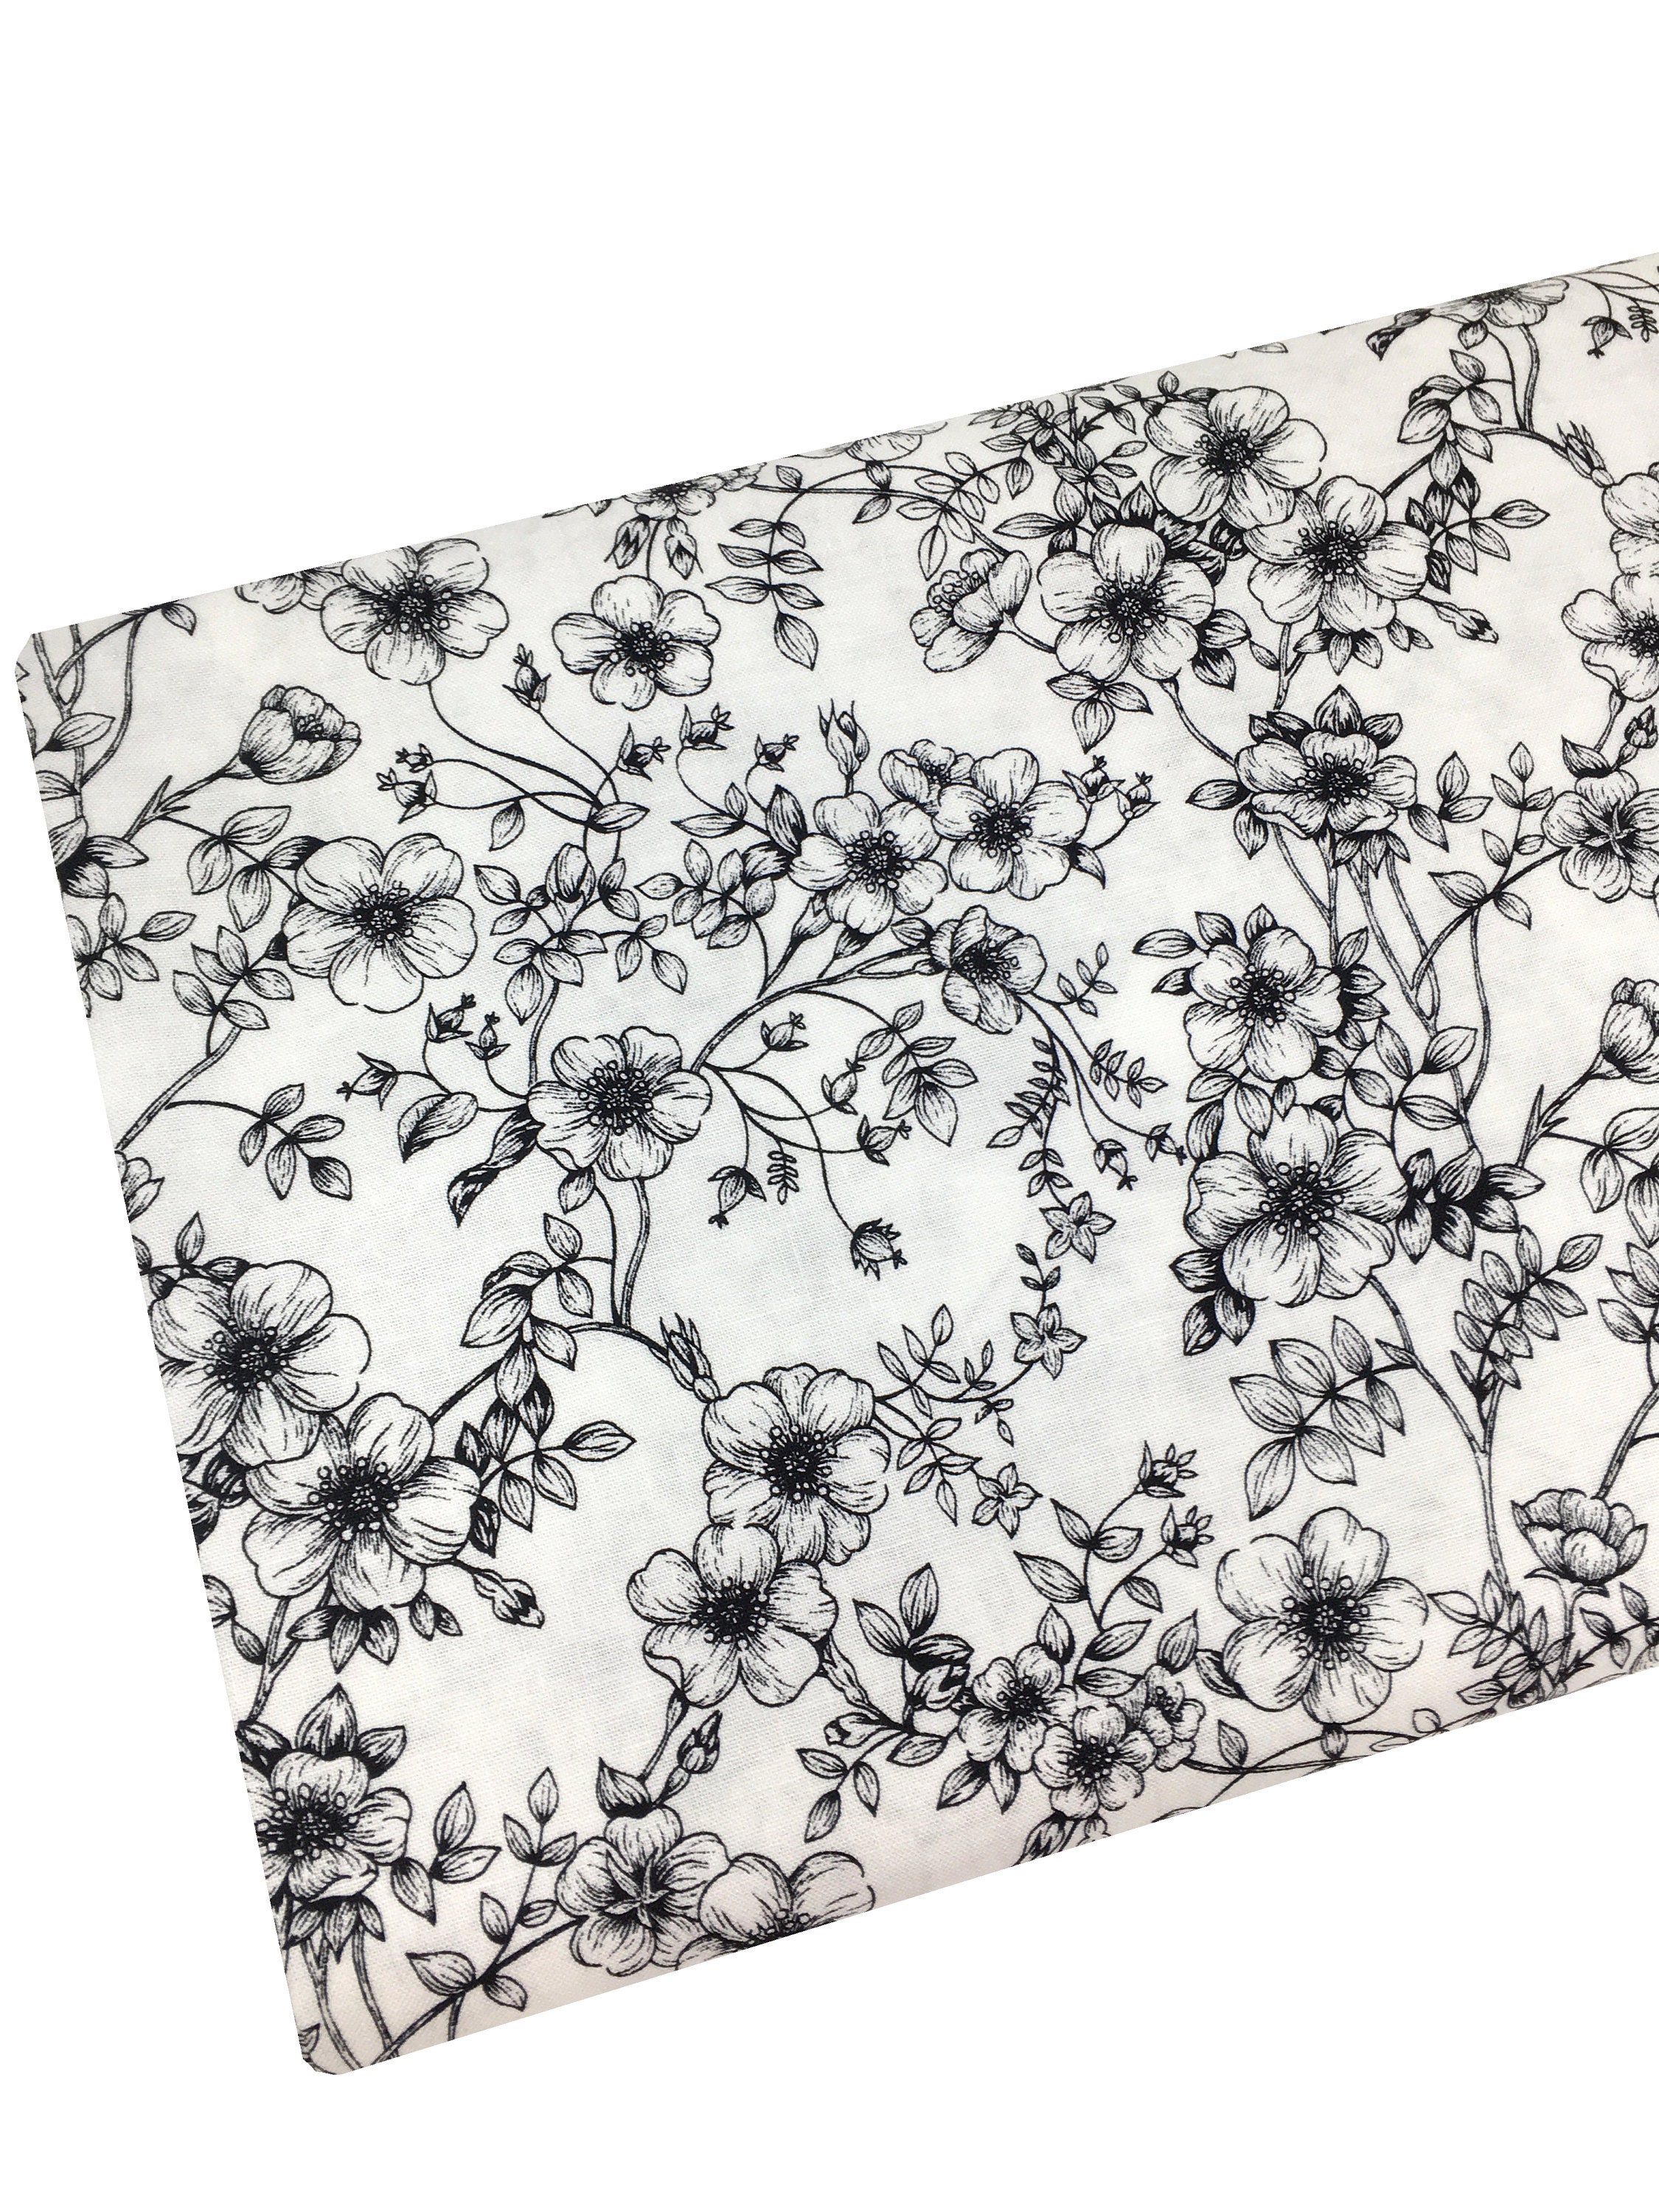 Black & White Cotton Quilt Fabric